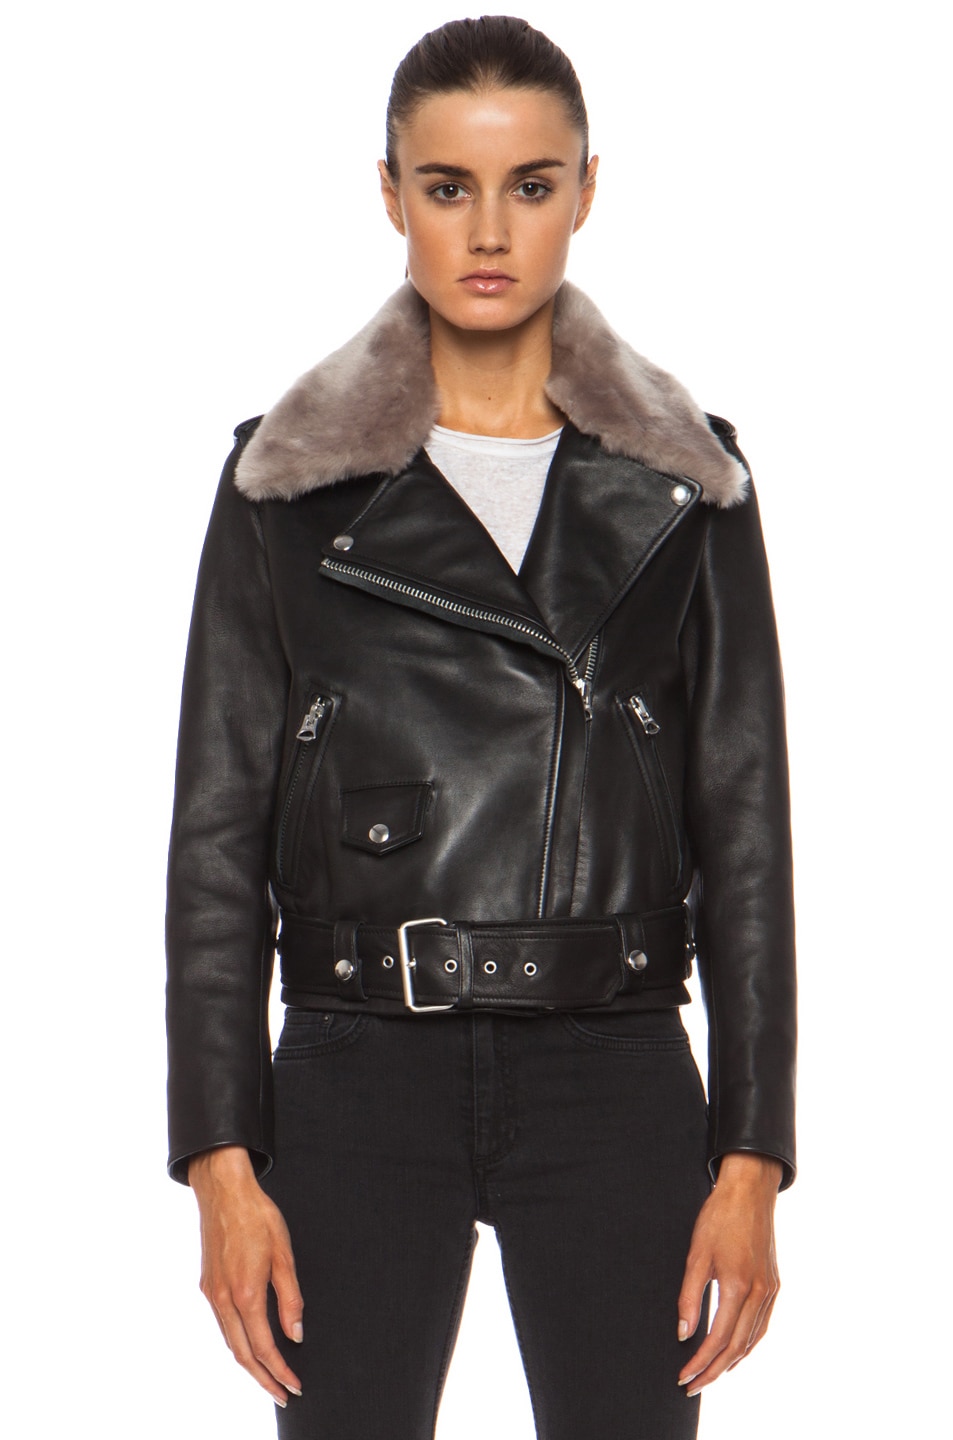 Acne Studios Mape Shearling Leather Jacket in Black & Stone | FWRD